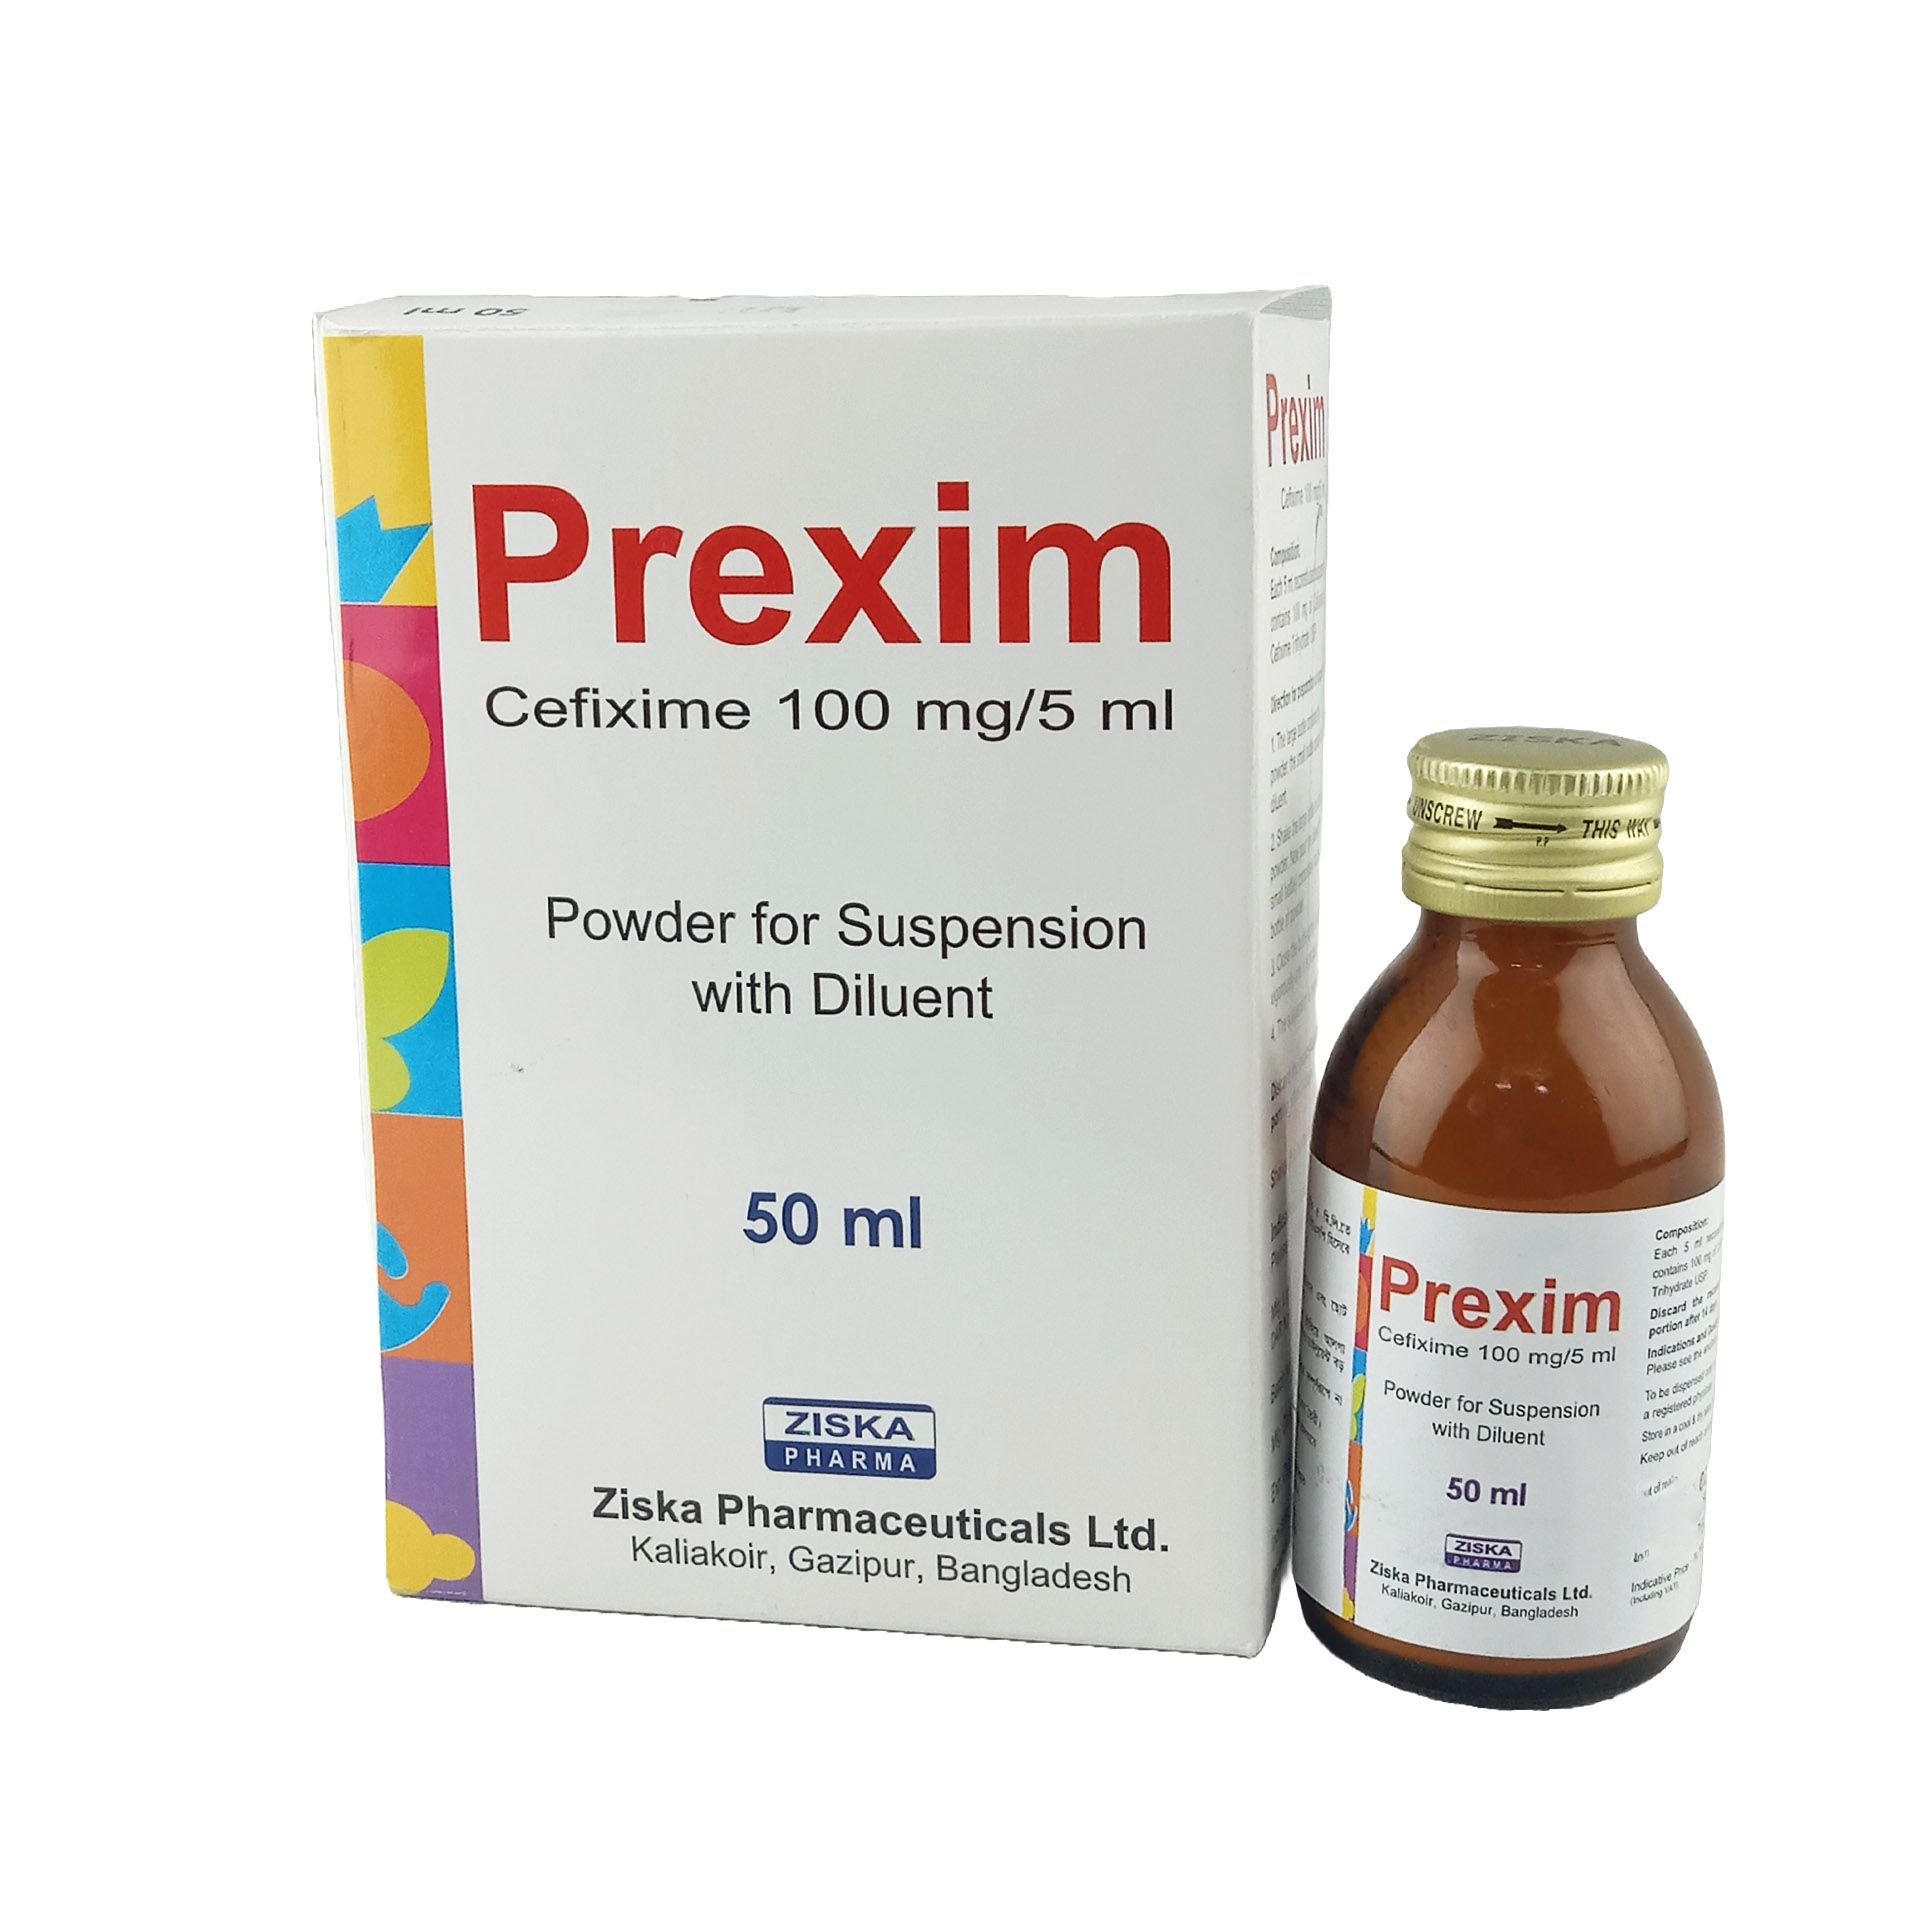 Prexim 100mg/5ml Powder for Suspension